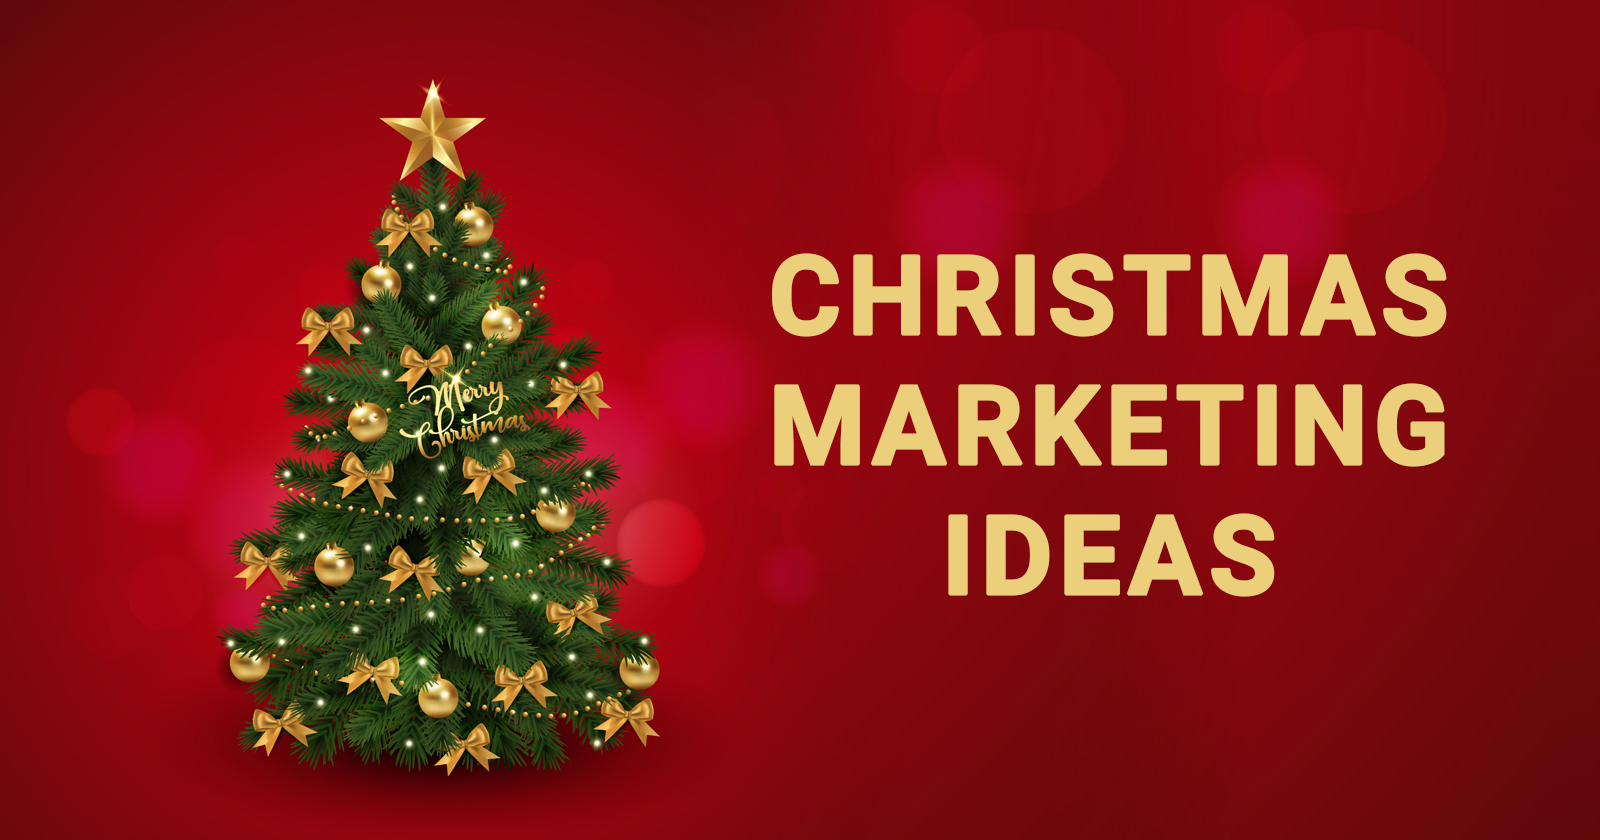 https://www.pagetraffic.com/blog/wp-content/uploads/2022/11/christmas-marketing-ideas.jpg